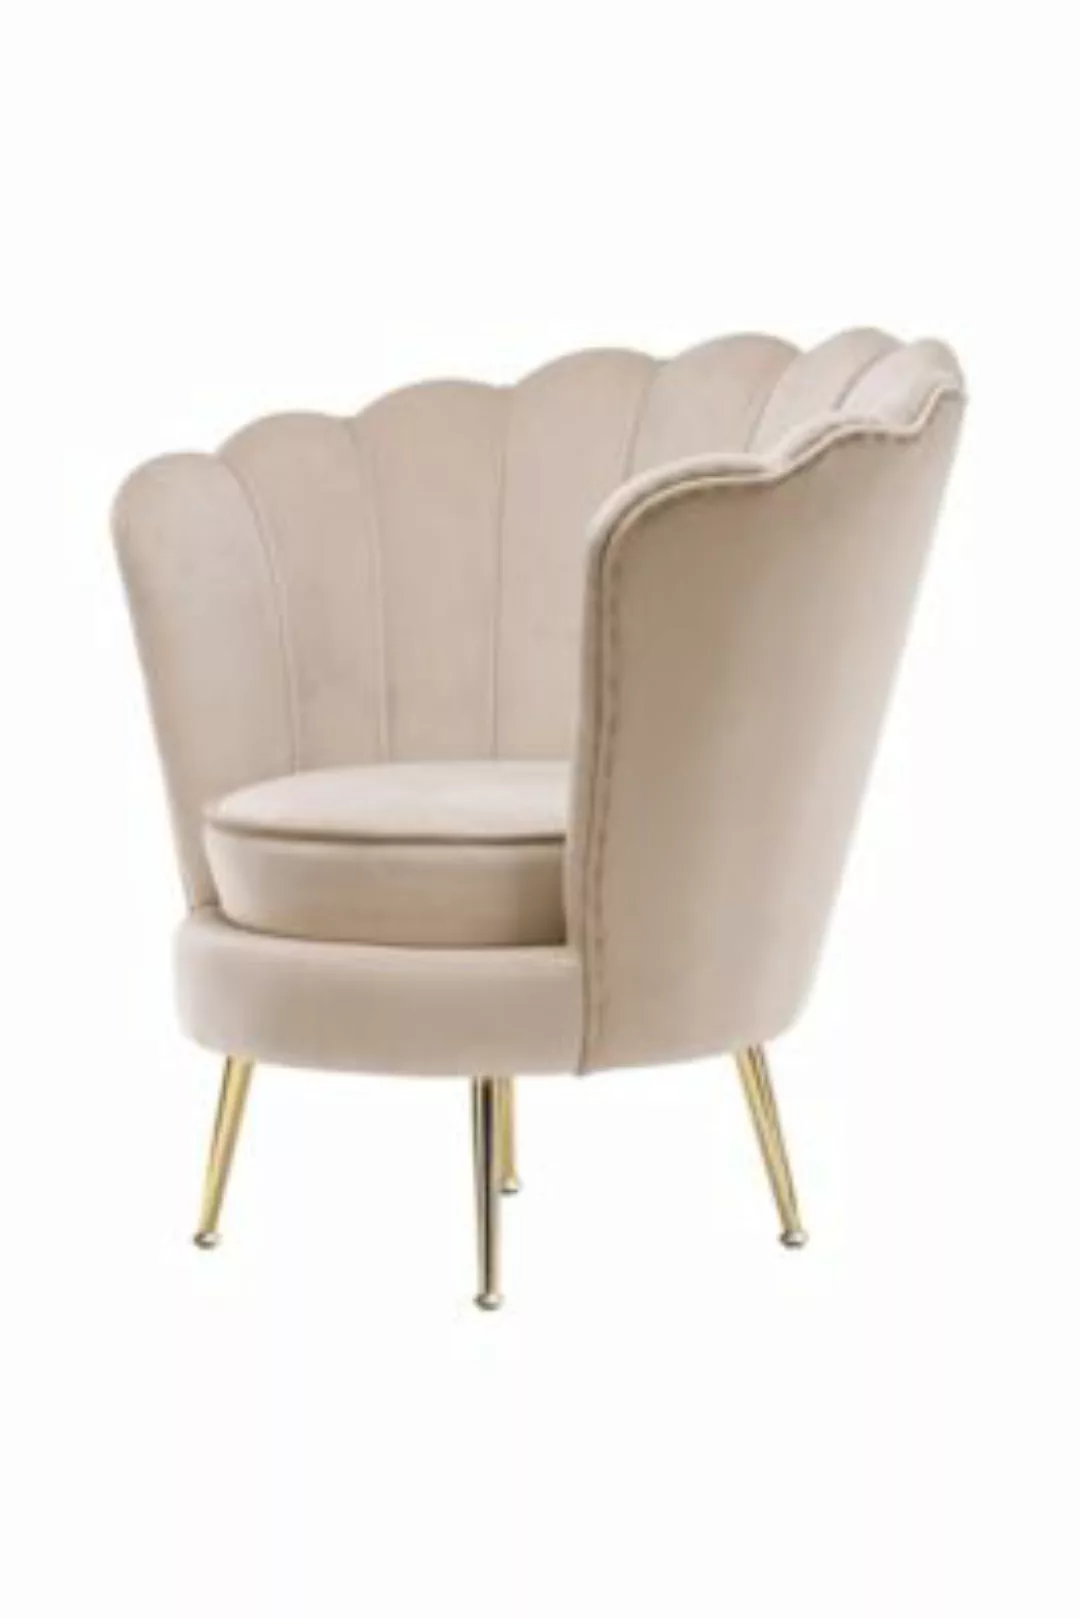 Kayoom Sessel Sofa / Sessel Barbara 125 Creme creme günstig online kaufen